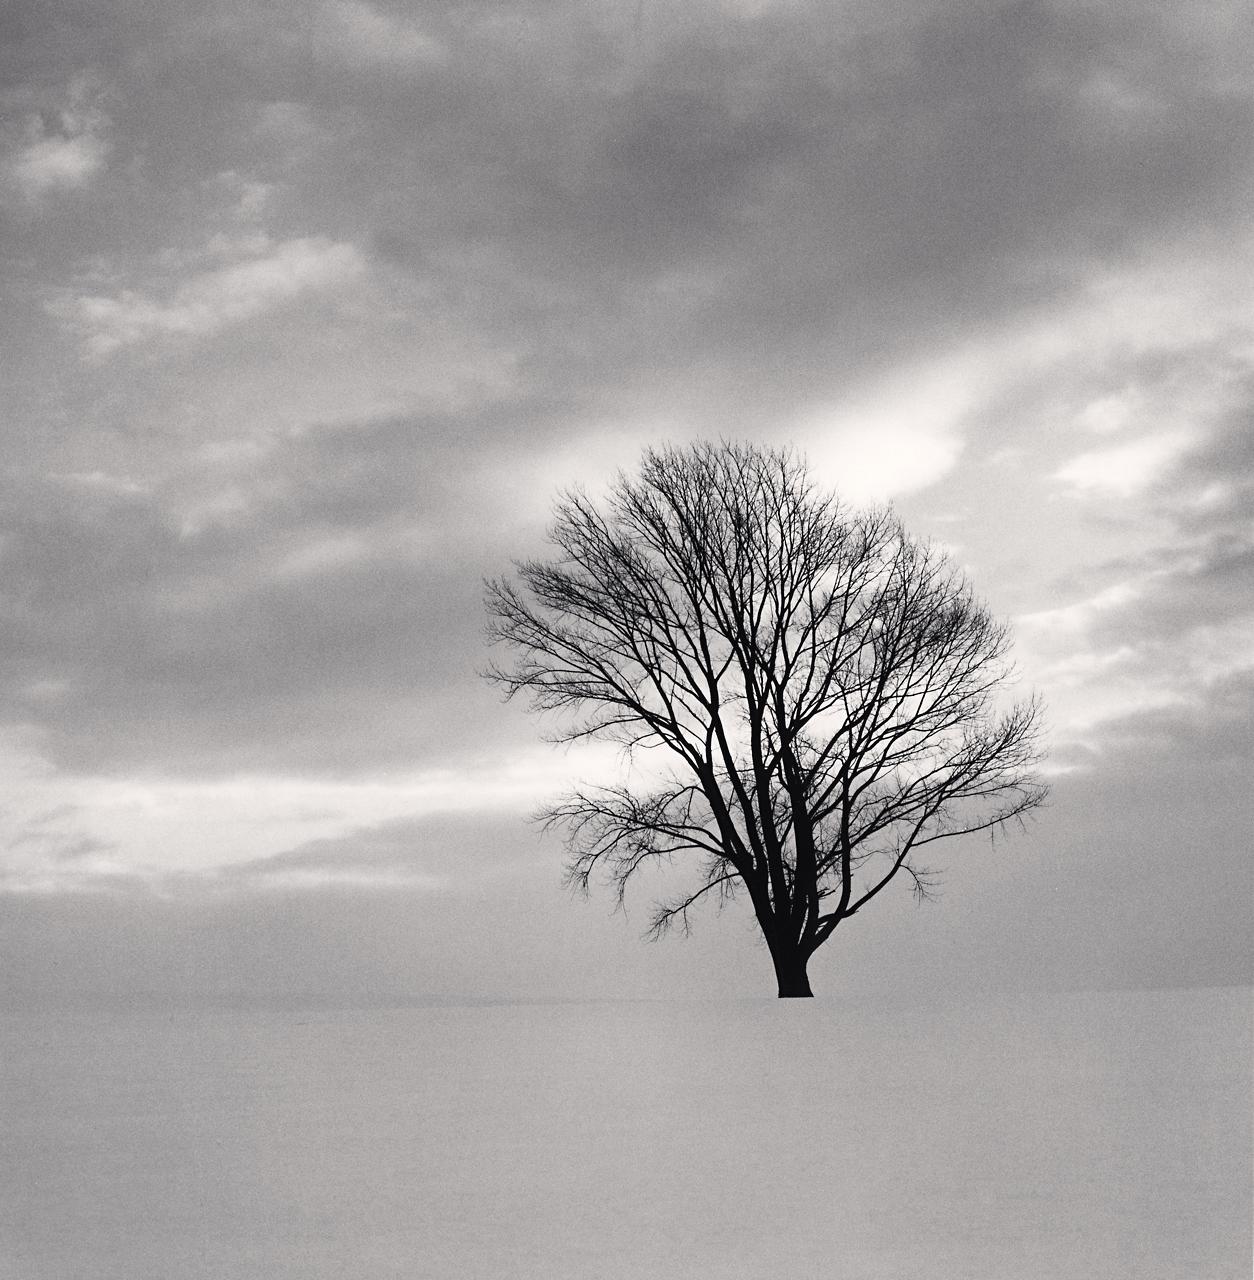 Michael Kenna Landscape Photograph - Philosopher’s Tree, Study 7, Biei, Hokkaido, Japan, limited edition photograph 